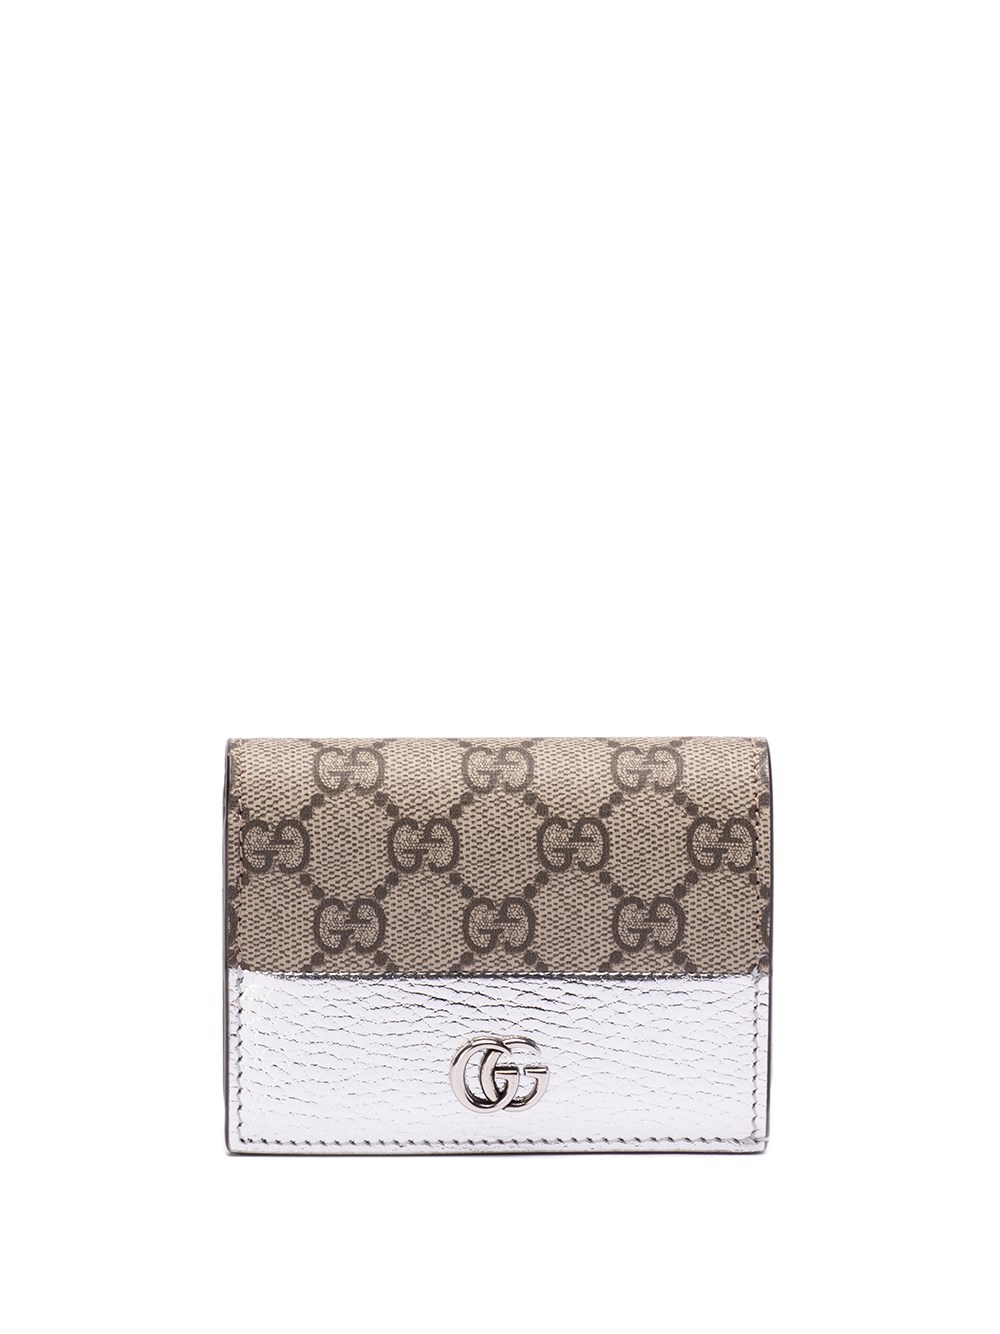 Gucci `petite Marmont` Card Case In Metallic